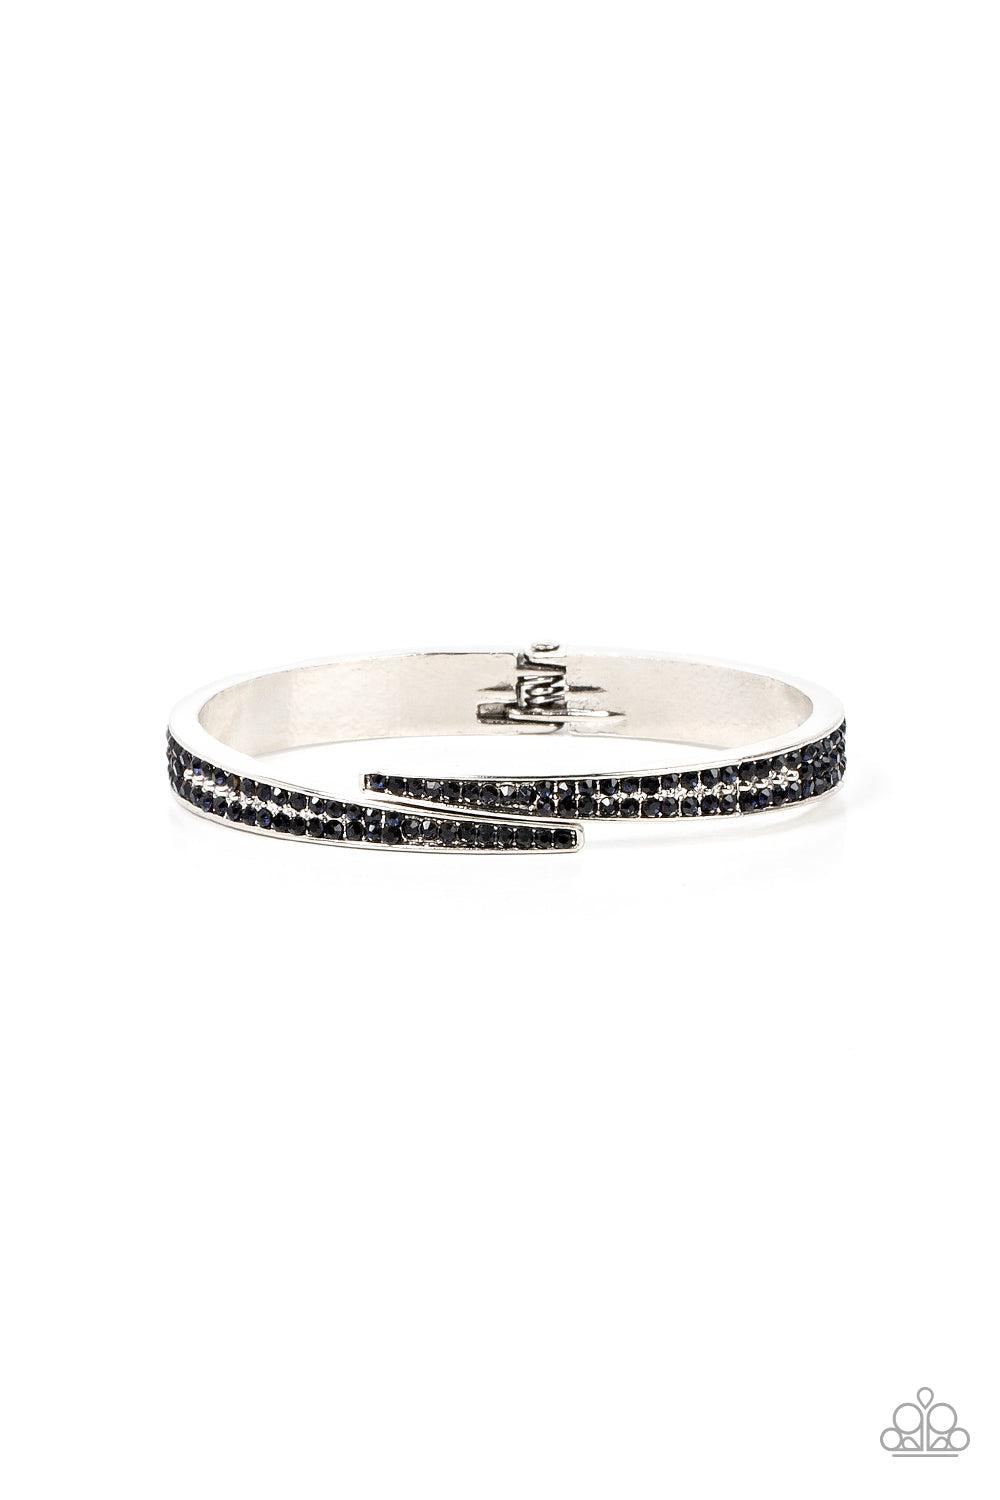 Deco Drama Blue Rhinestone Bracelet - Paparazzi Accessories- lightbox - CarasShop.com - $5 Jewelry by Cara Jewels